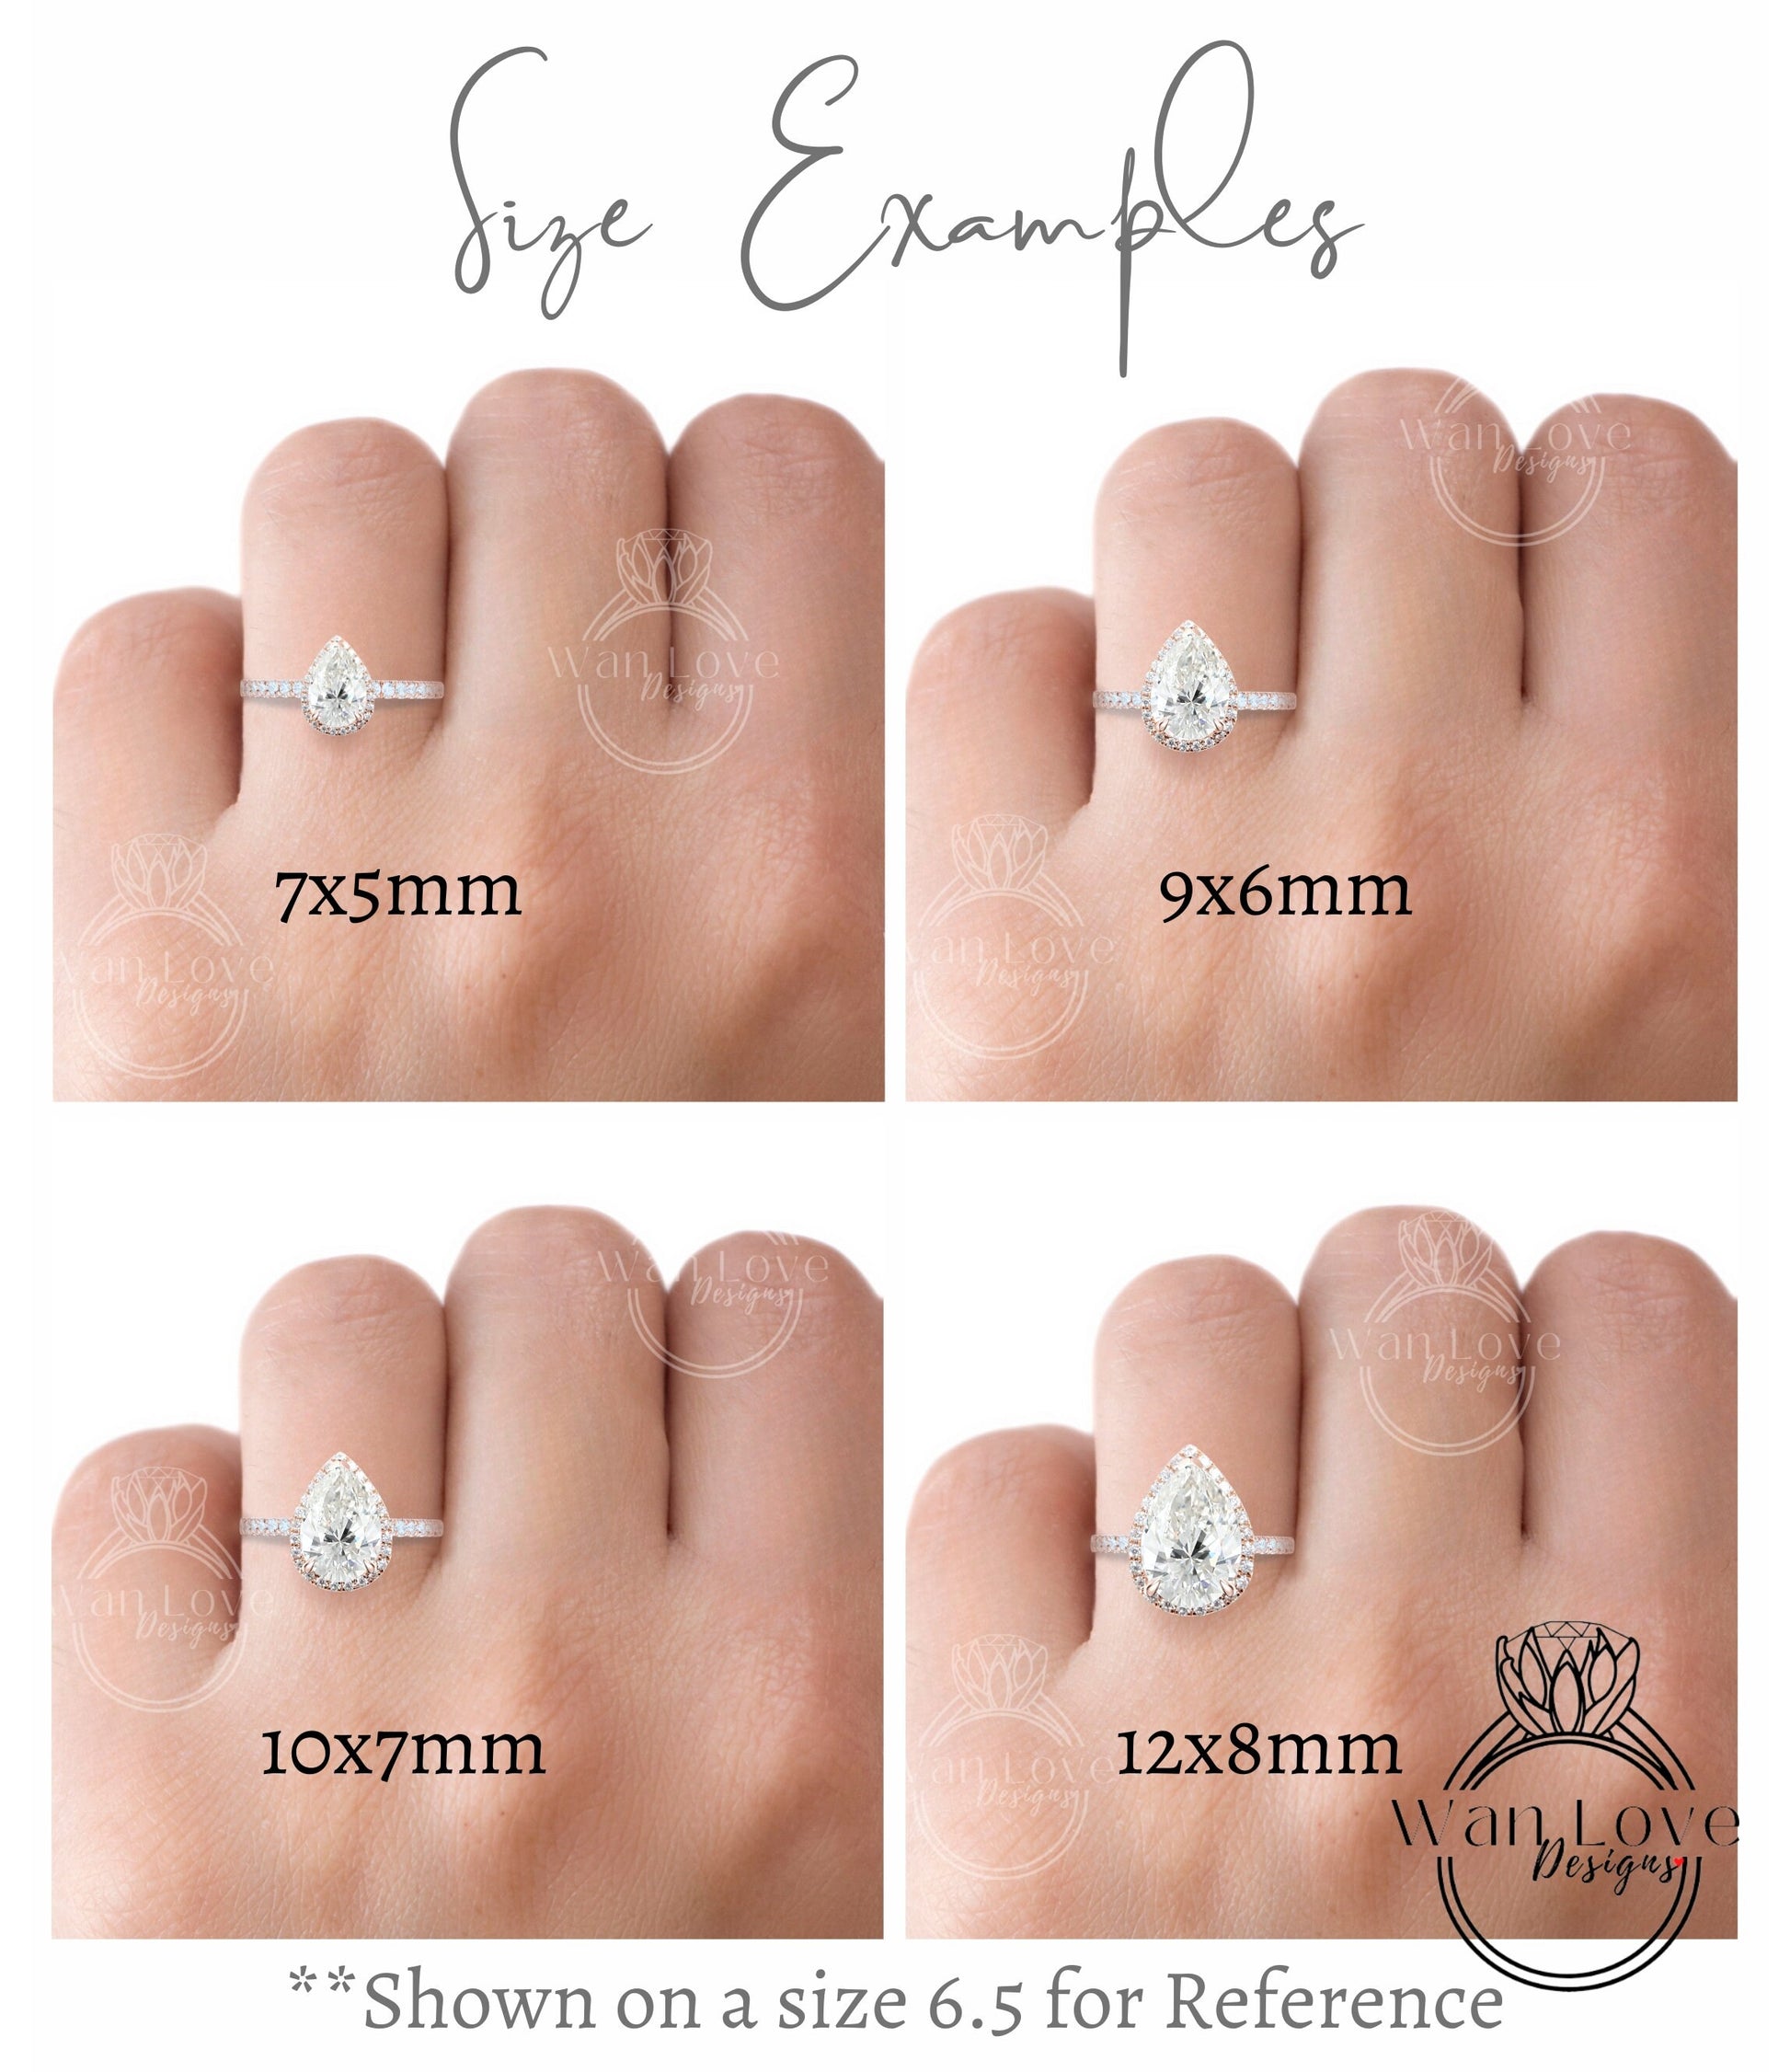 Vintage Pear shaped Purple Alexandrite Sapphire Engagement Ring, Pear Cut 14k Rose Gold Diamond Halo Ring, Wedding Anniversary Proposal Ring